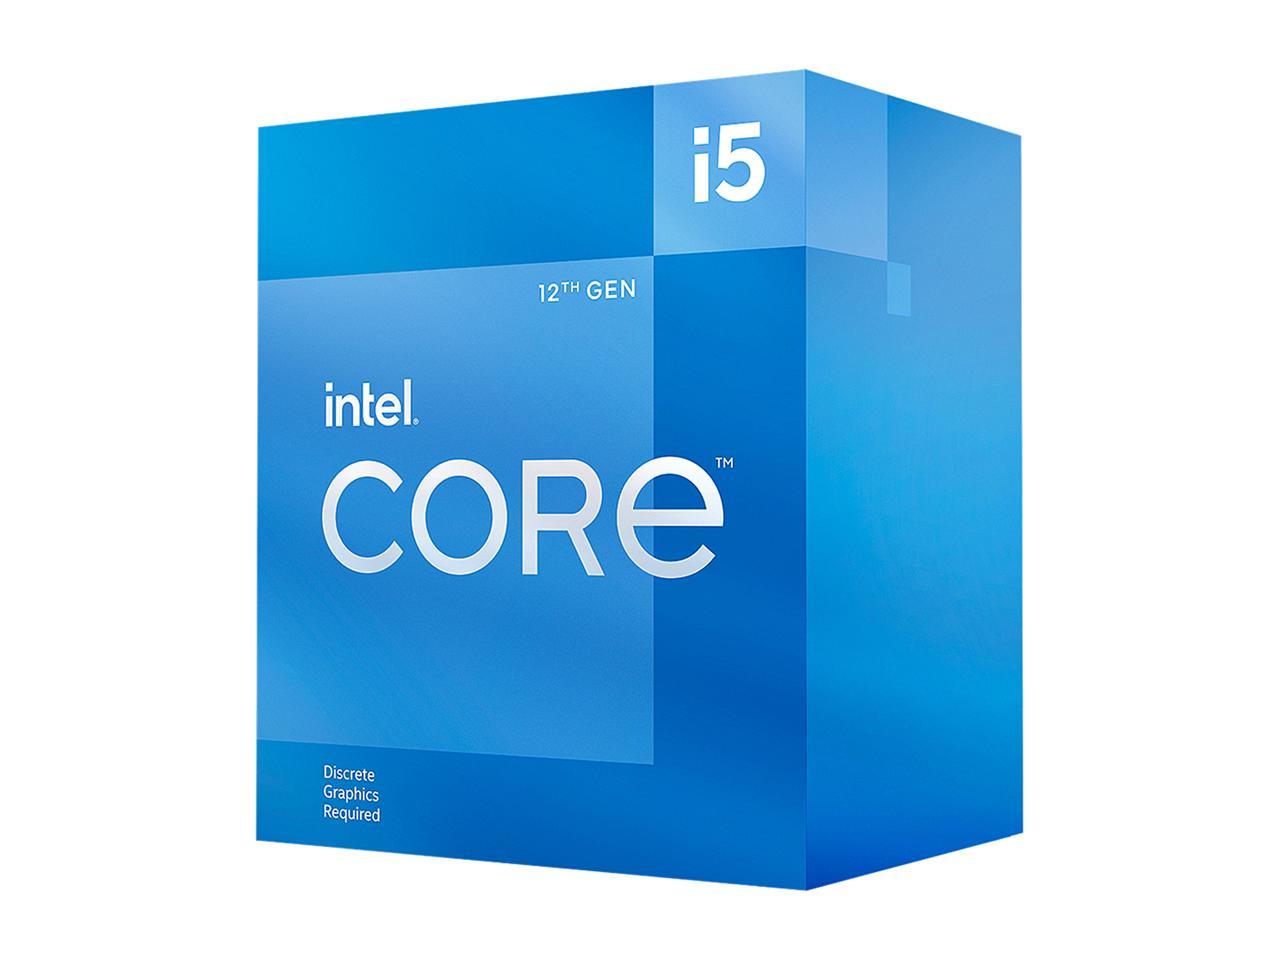 Intel Core i5-12400F Desktop Processor + Intel Screwdriver (Blue) $140 + Free Shipping